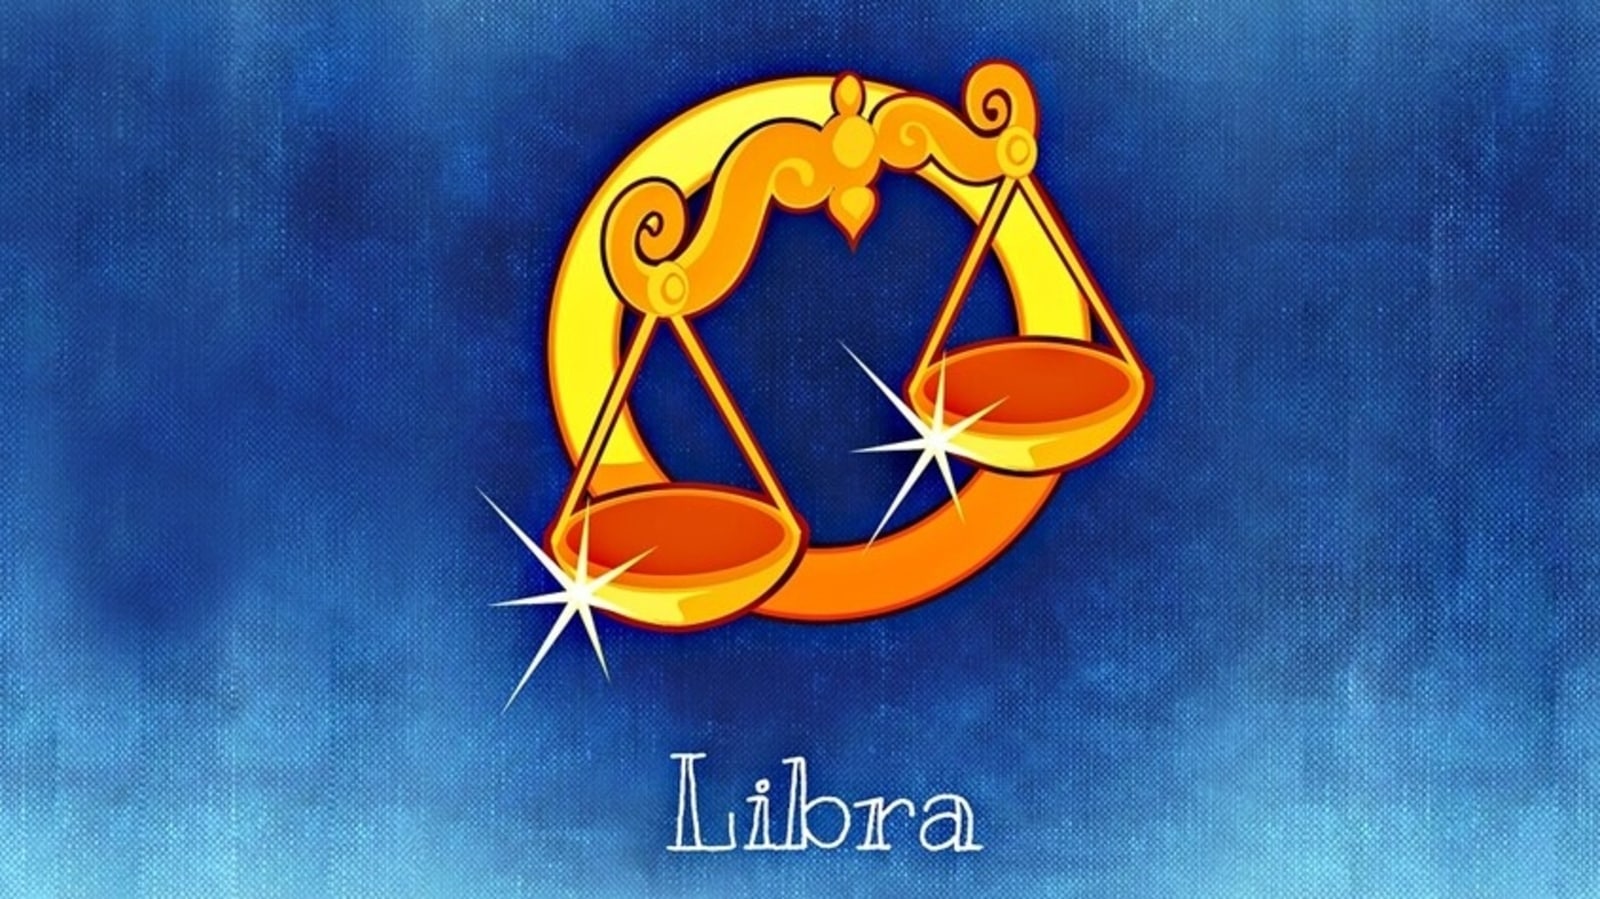 libra daily horoscope ask ganesha